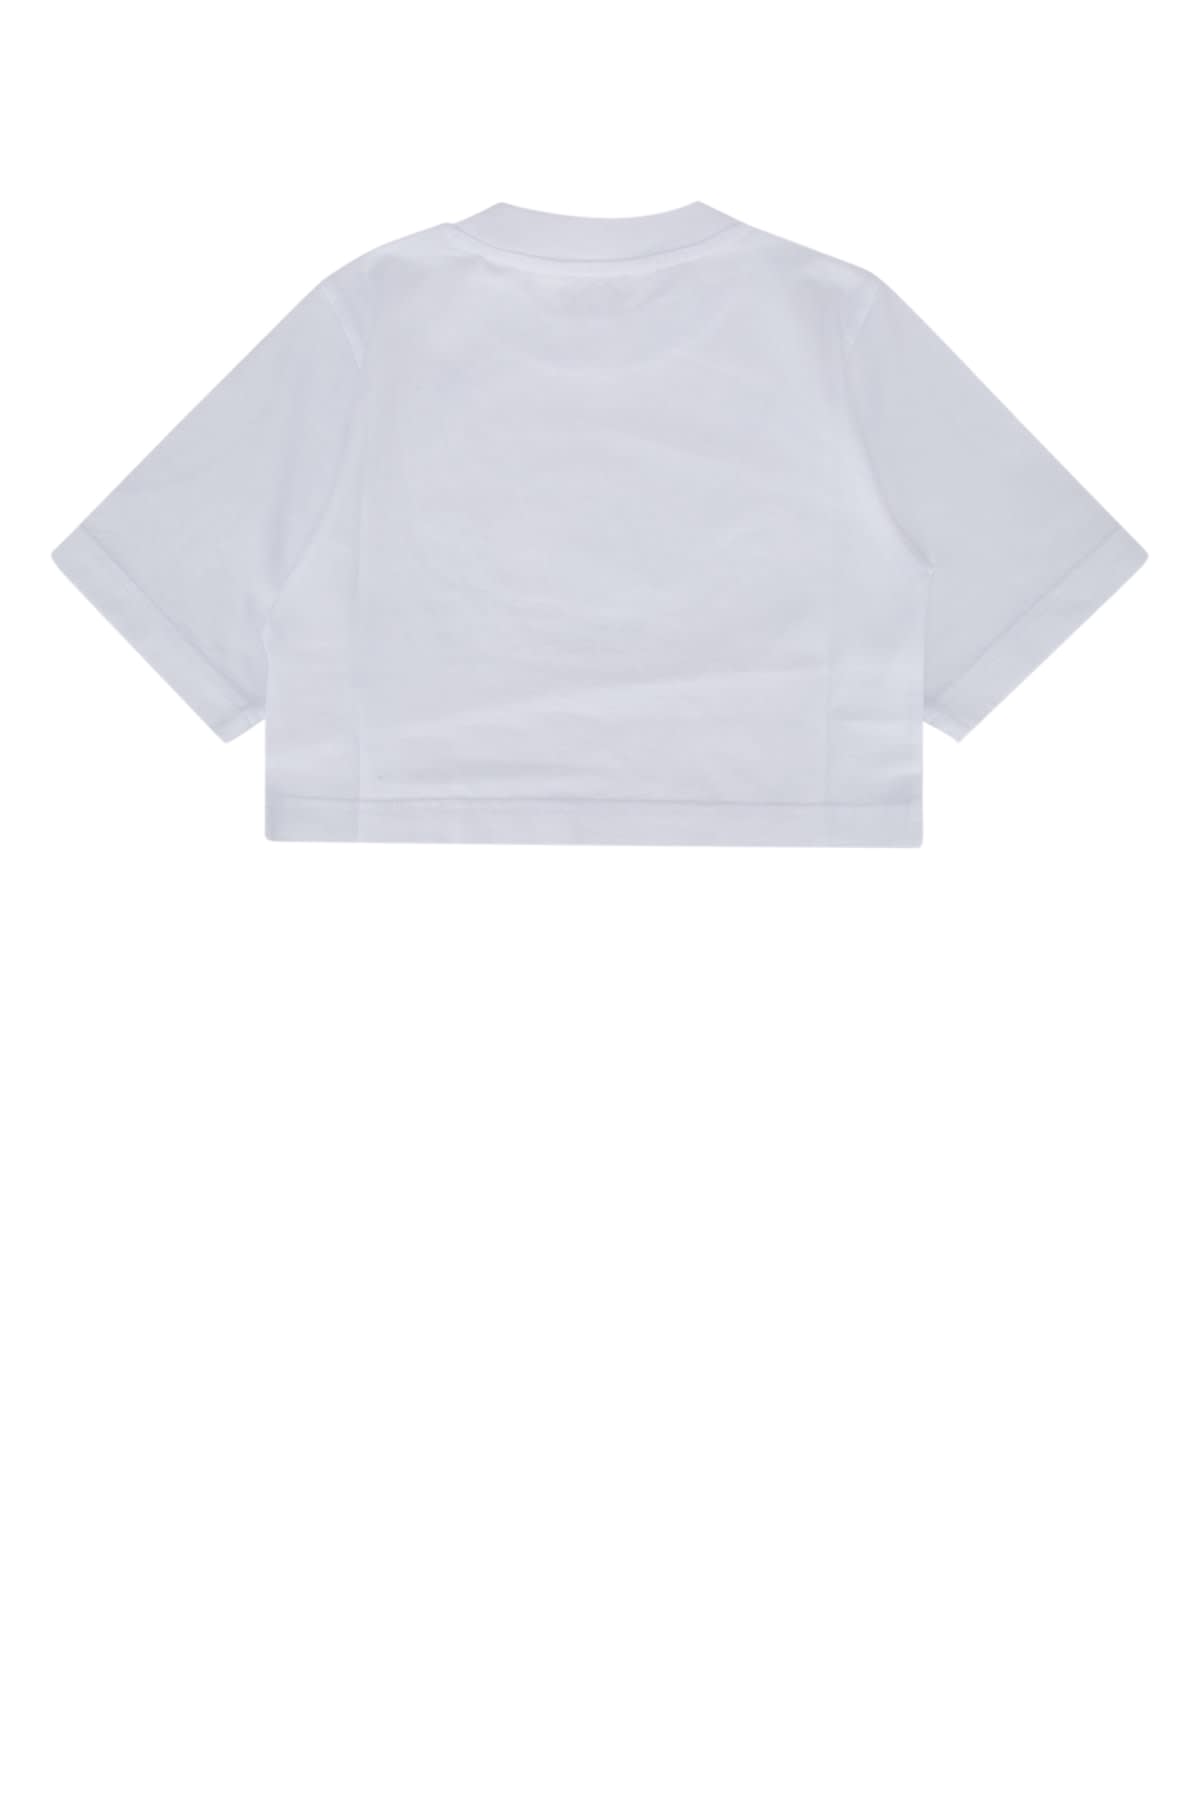 Palm Angels Kids' T-shirt In Whitebrown